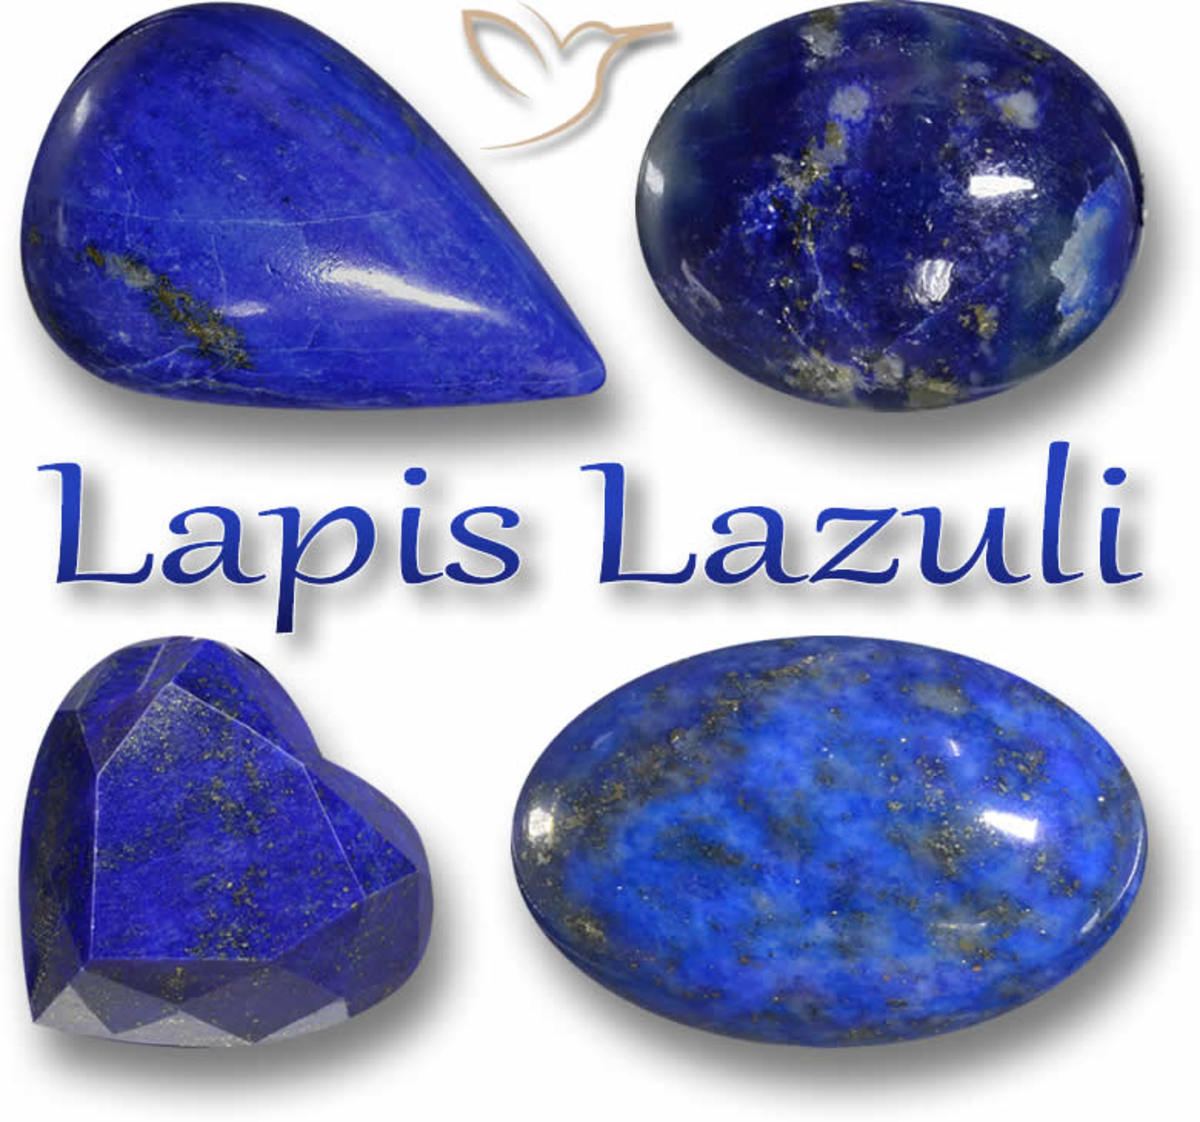 Lapis Lazuli the Power Stone of the Bible